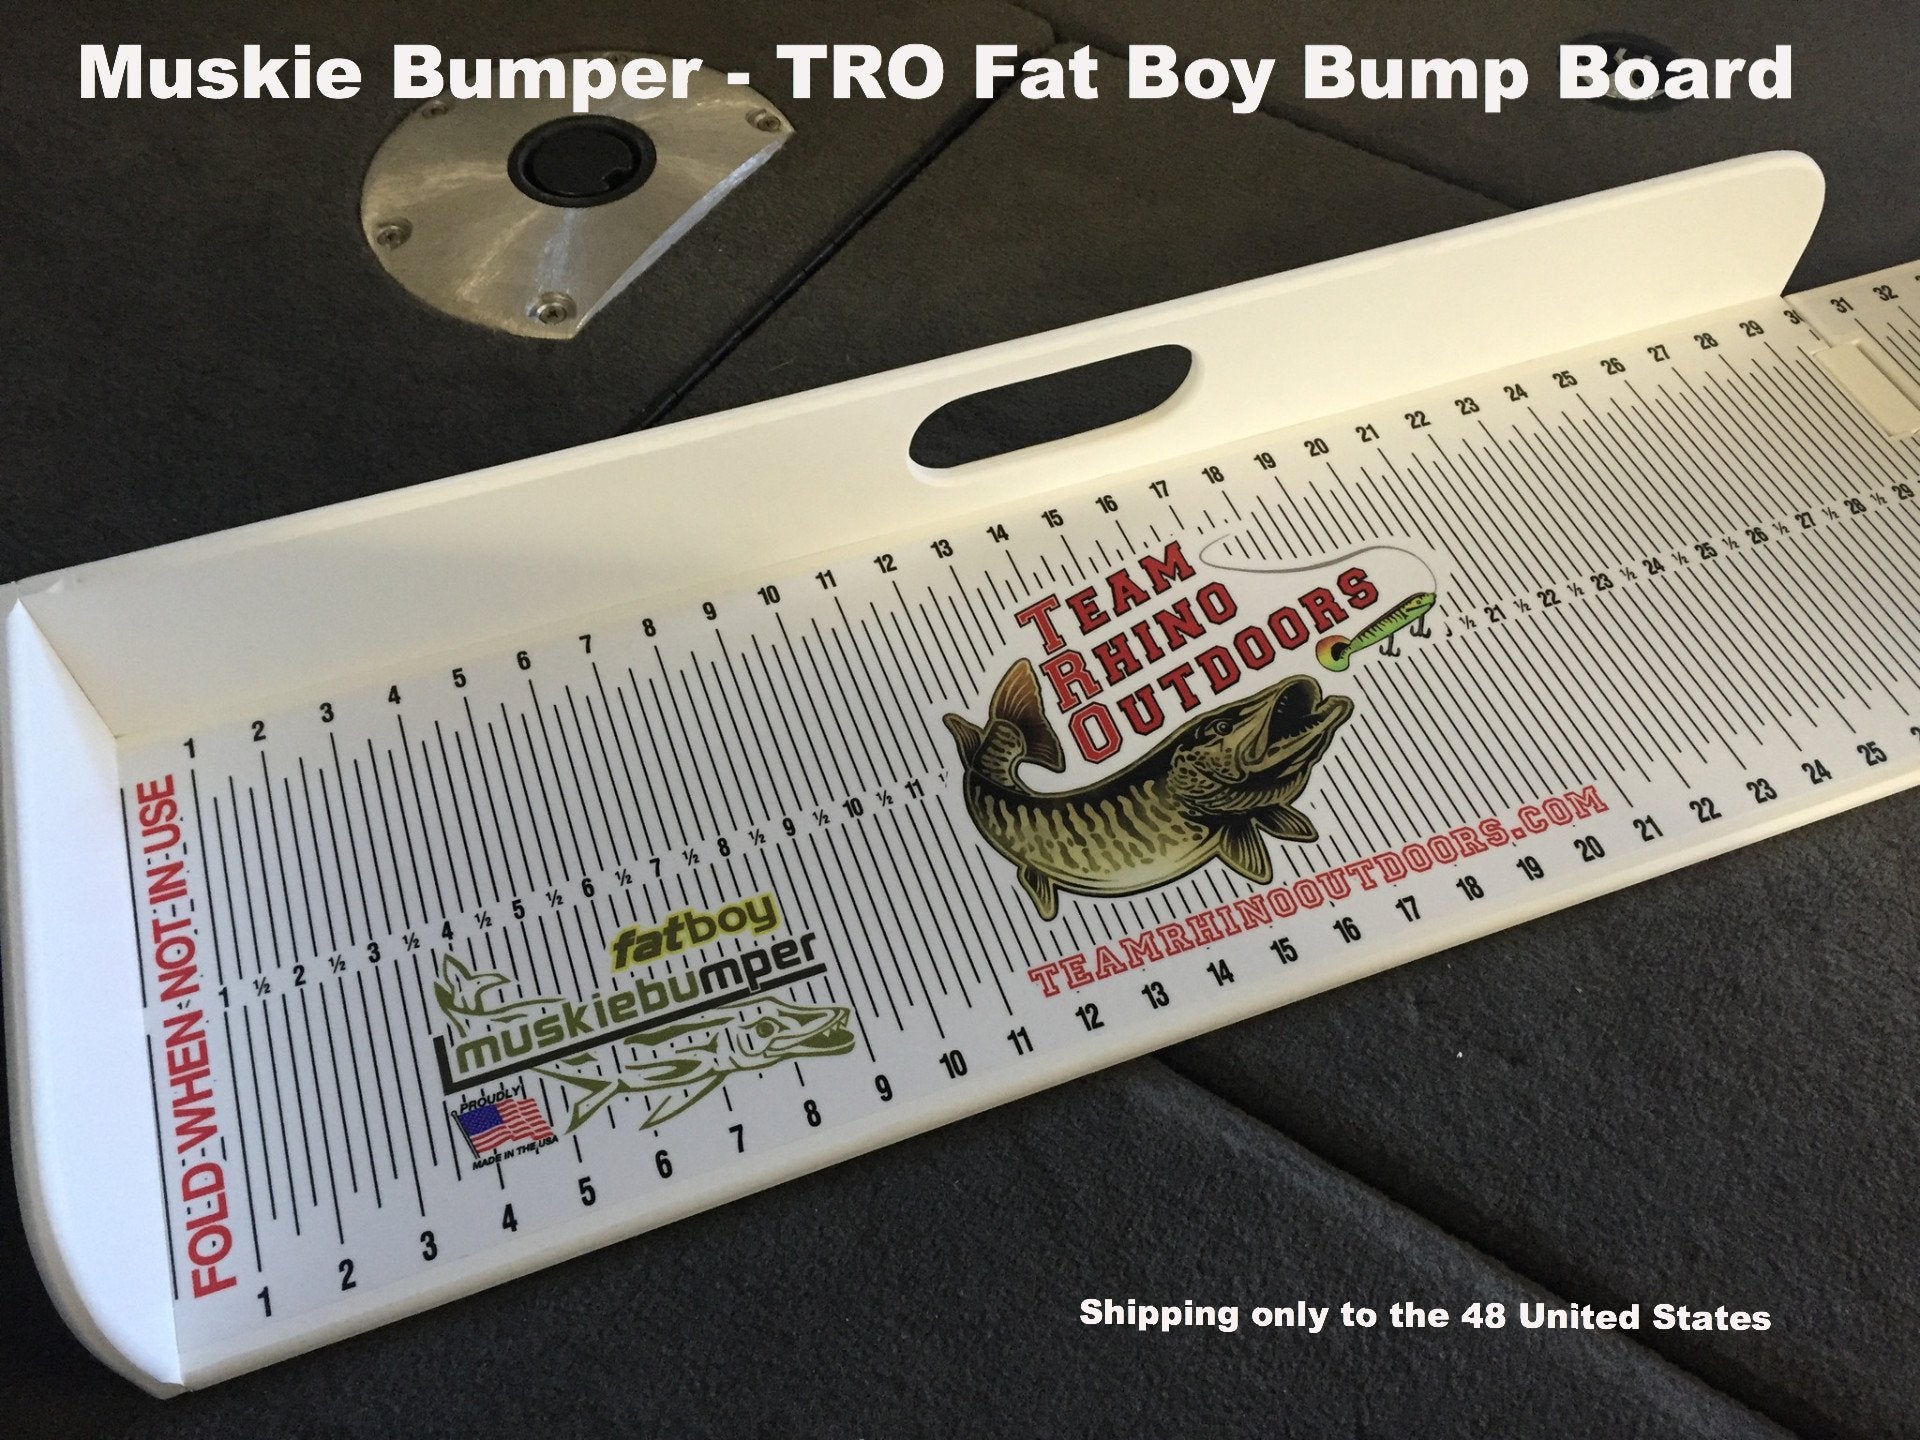 Muskie Bumper Fat Boy Bump Board w/TRO Logo (Shipping to U.S. Only